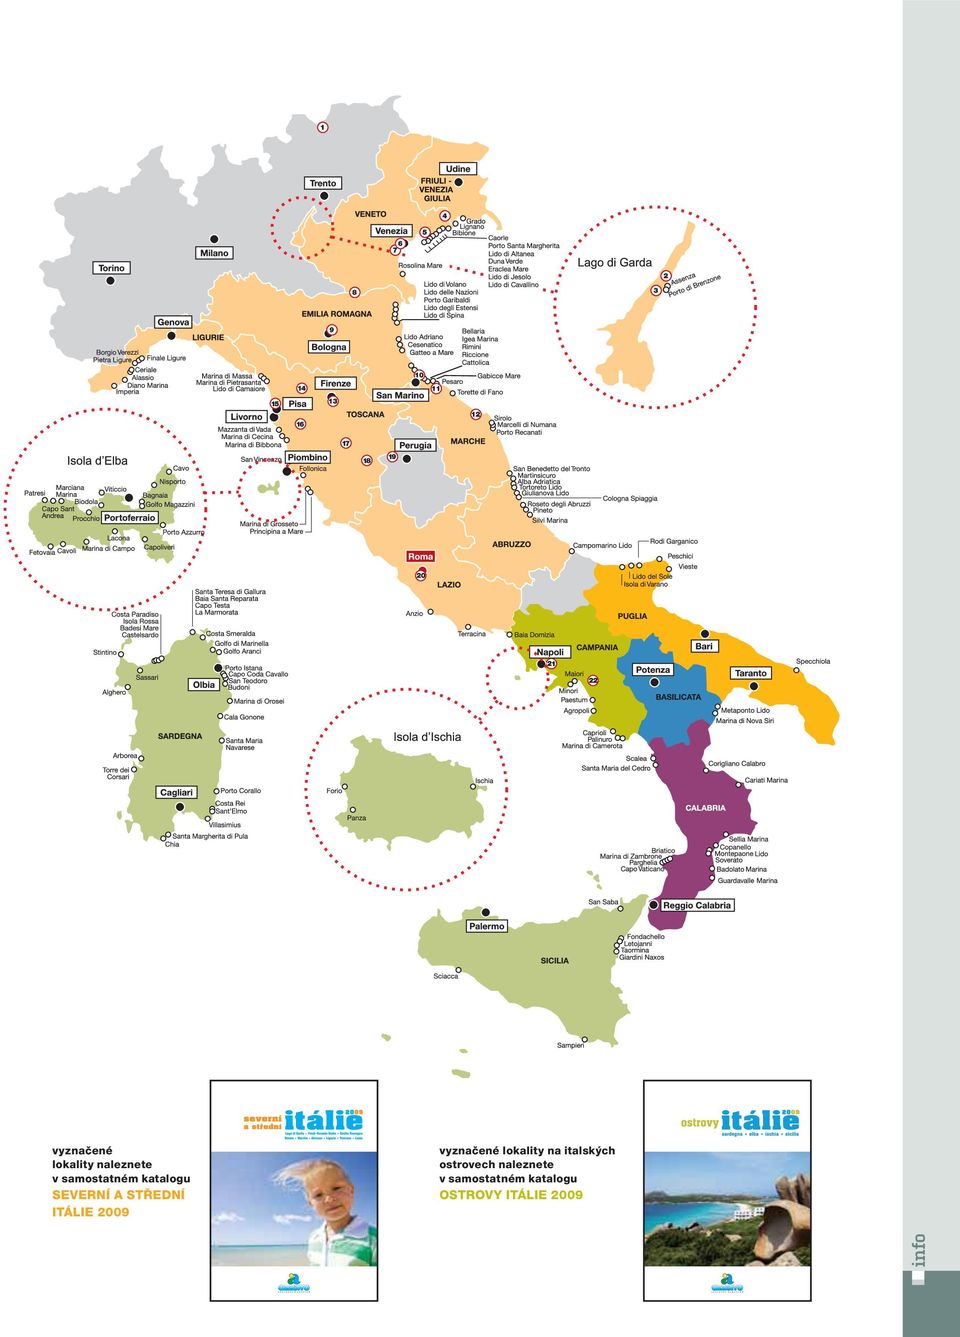 vyznačené lokality na italských ostrovech